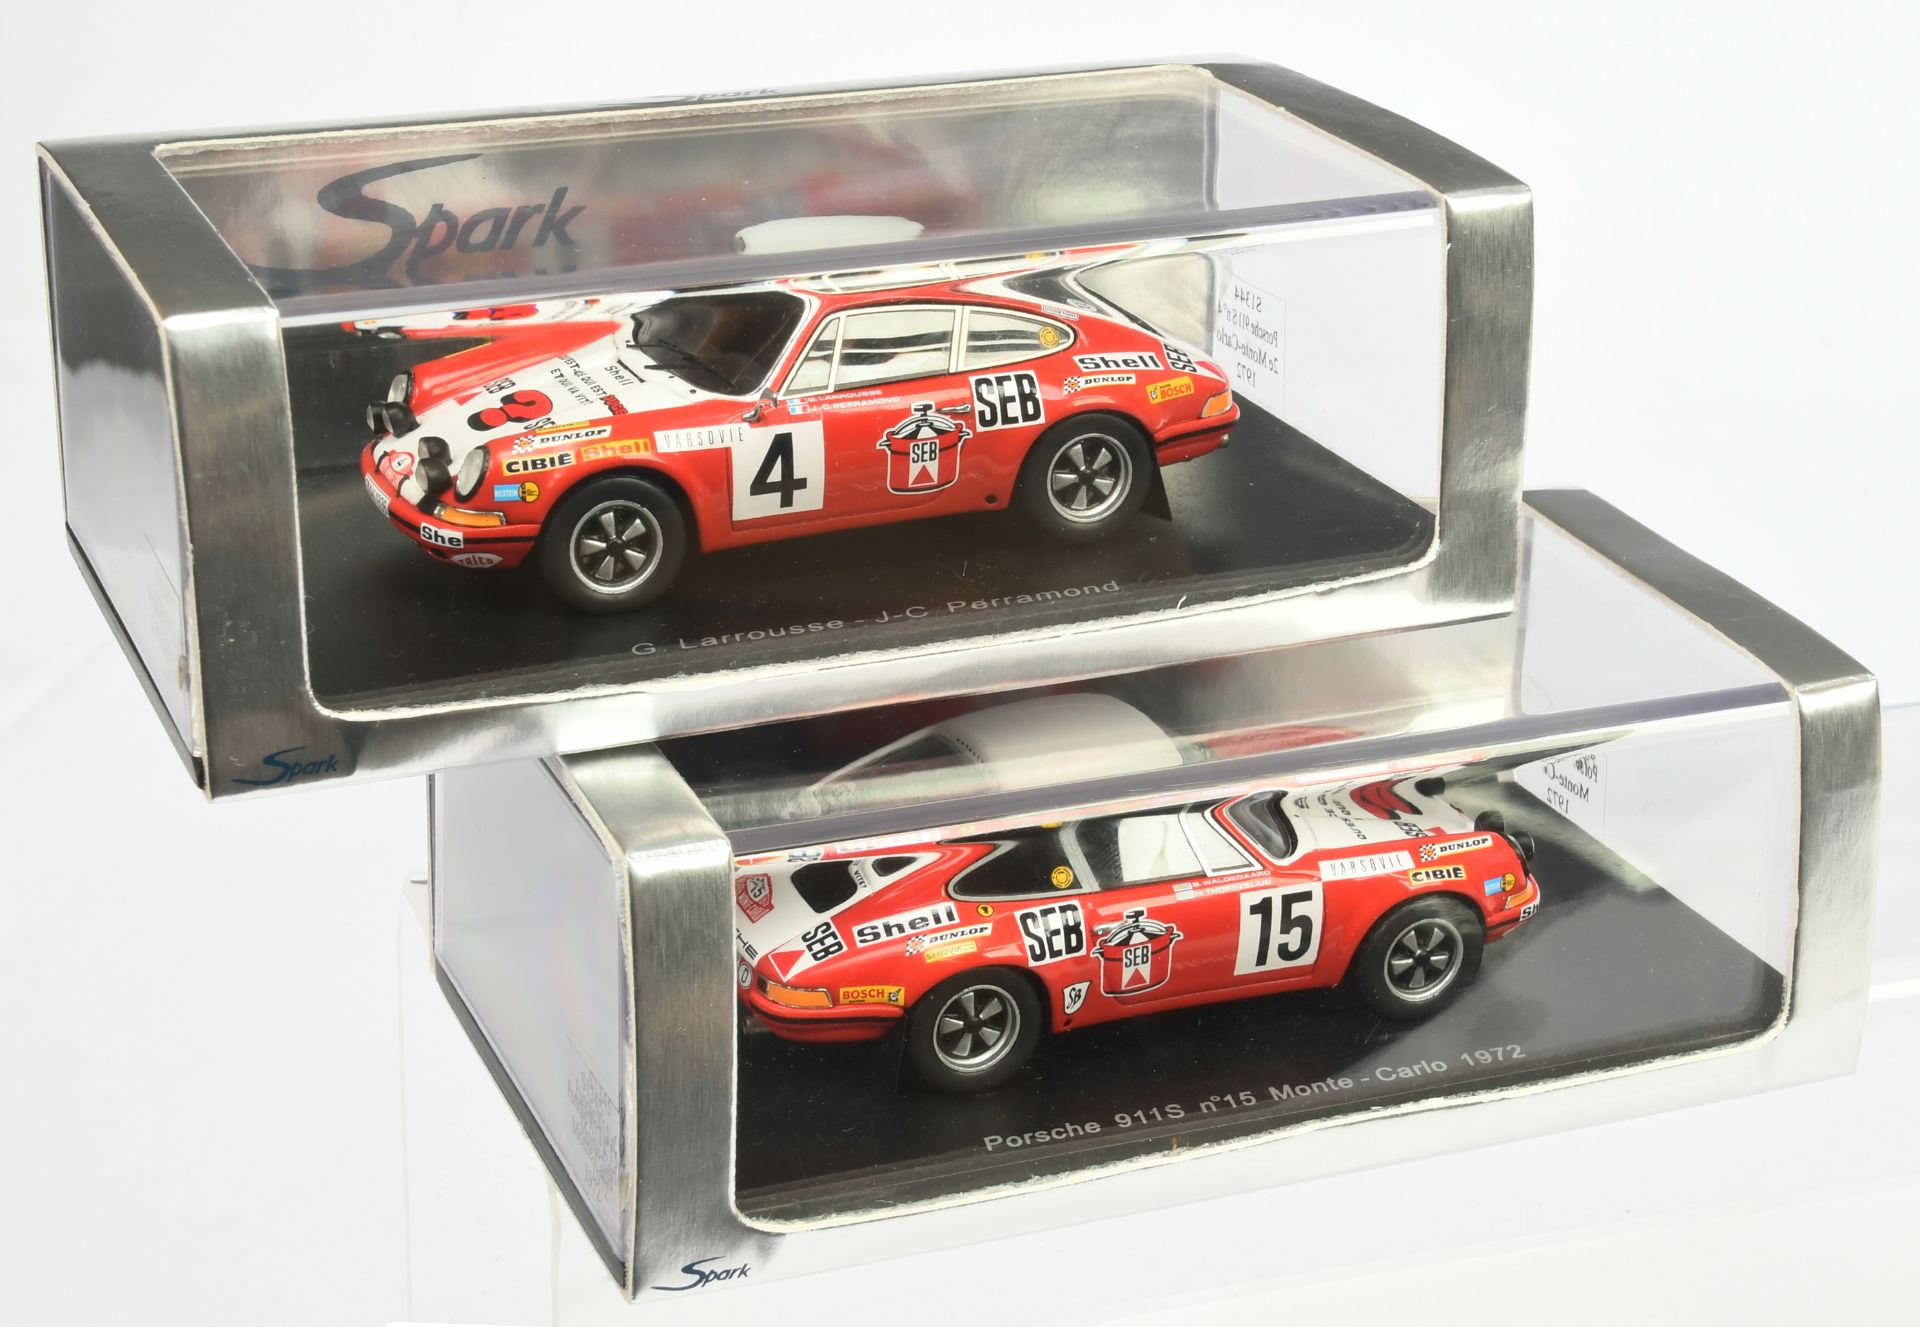 Pair of Porsche 911S Monte Carlo 1972 Spark models